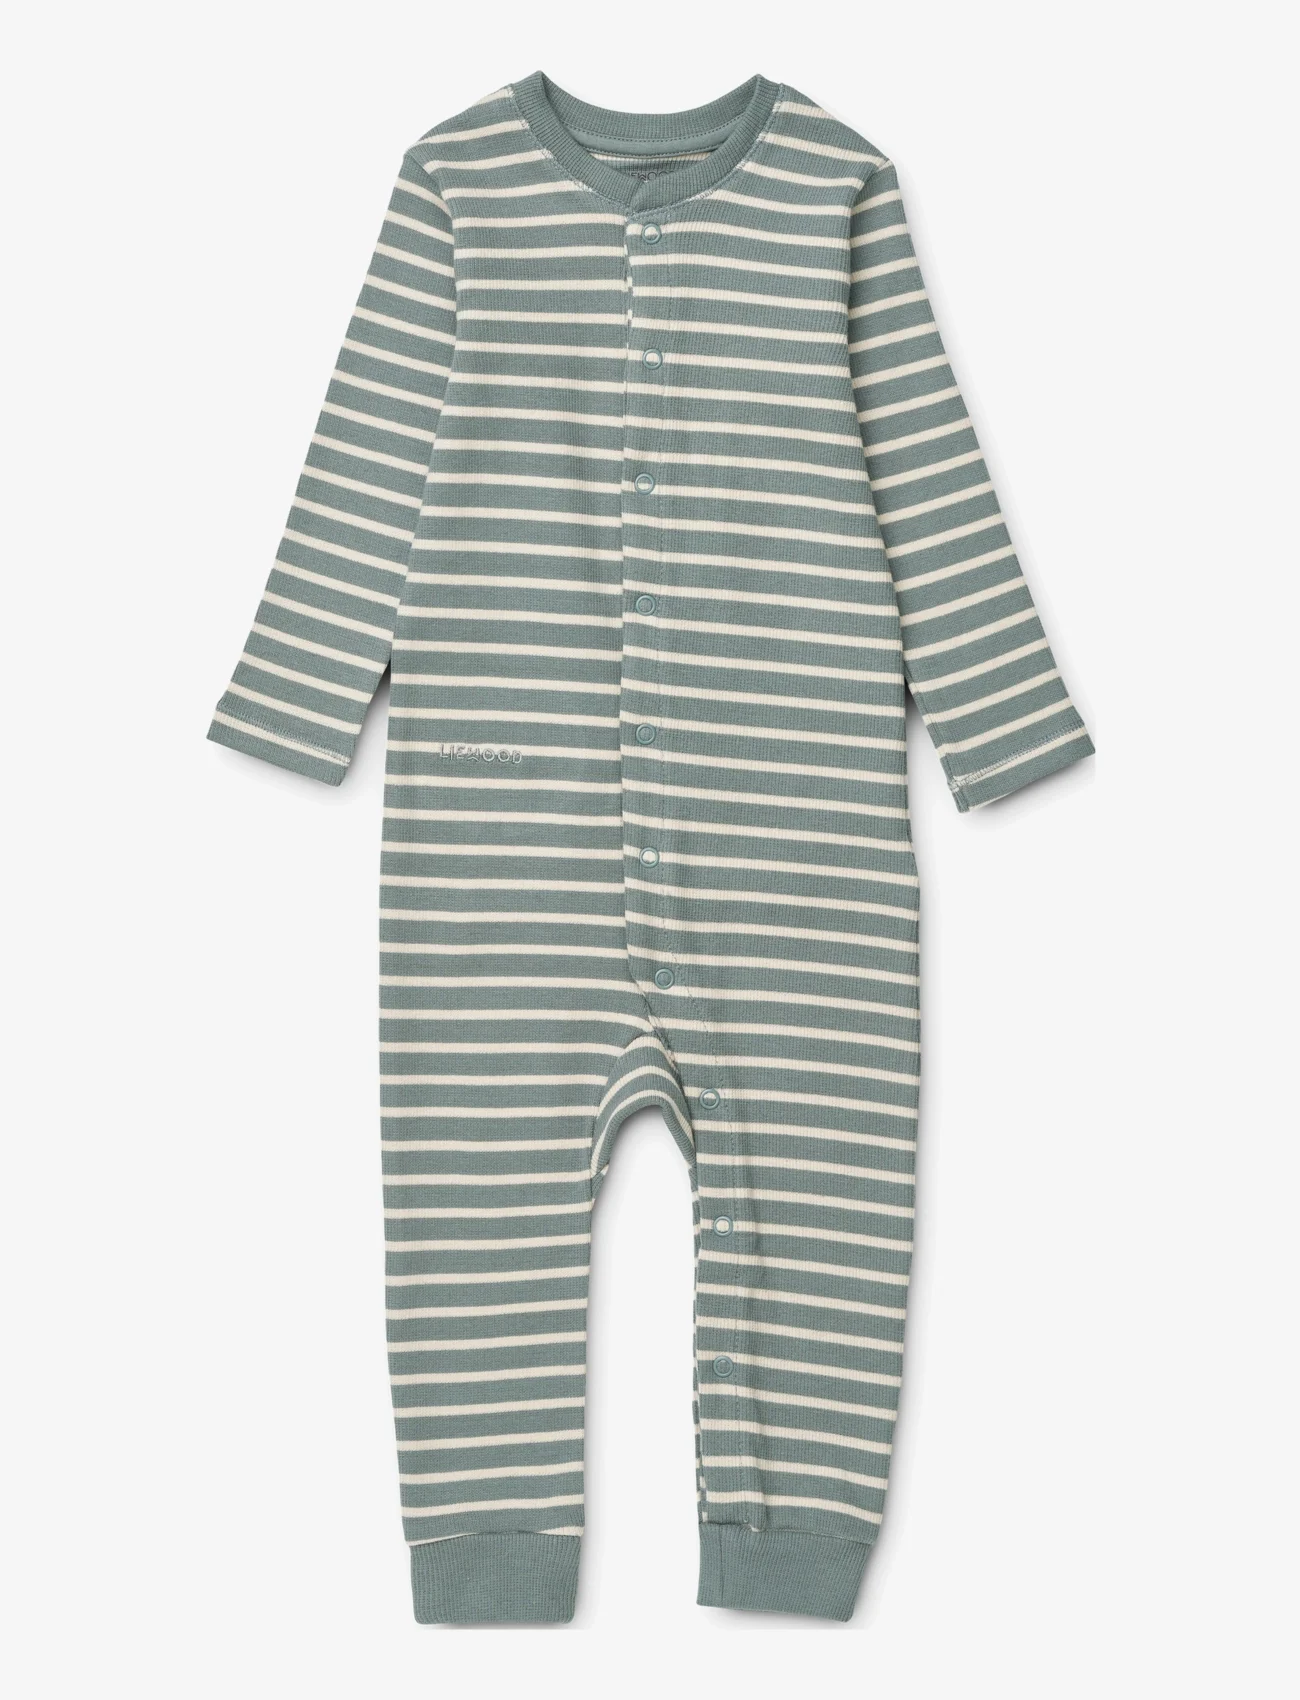 Liewood - Birk pyjamas jumpsuit - slaapoveralls - y/d stripe - 0